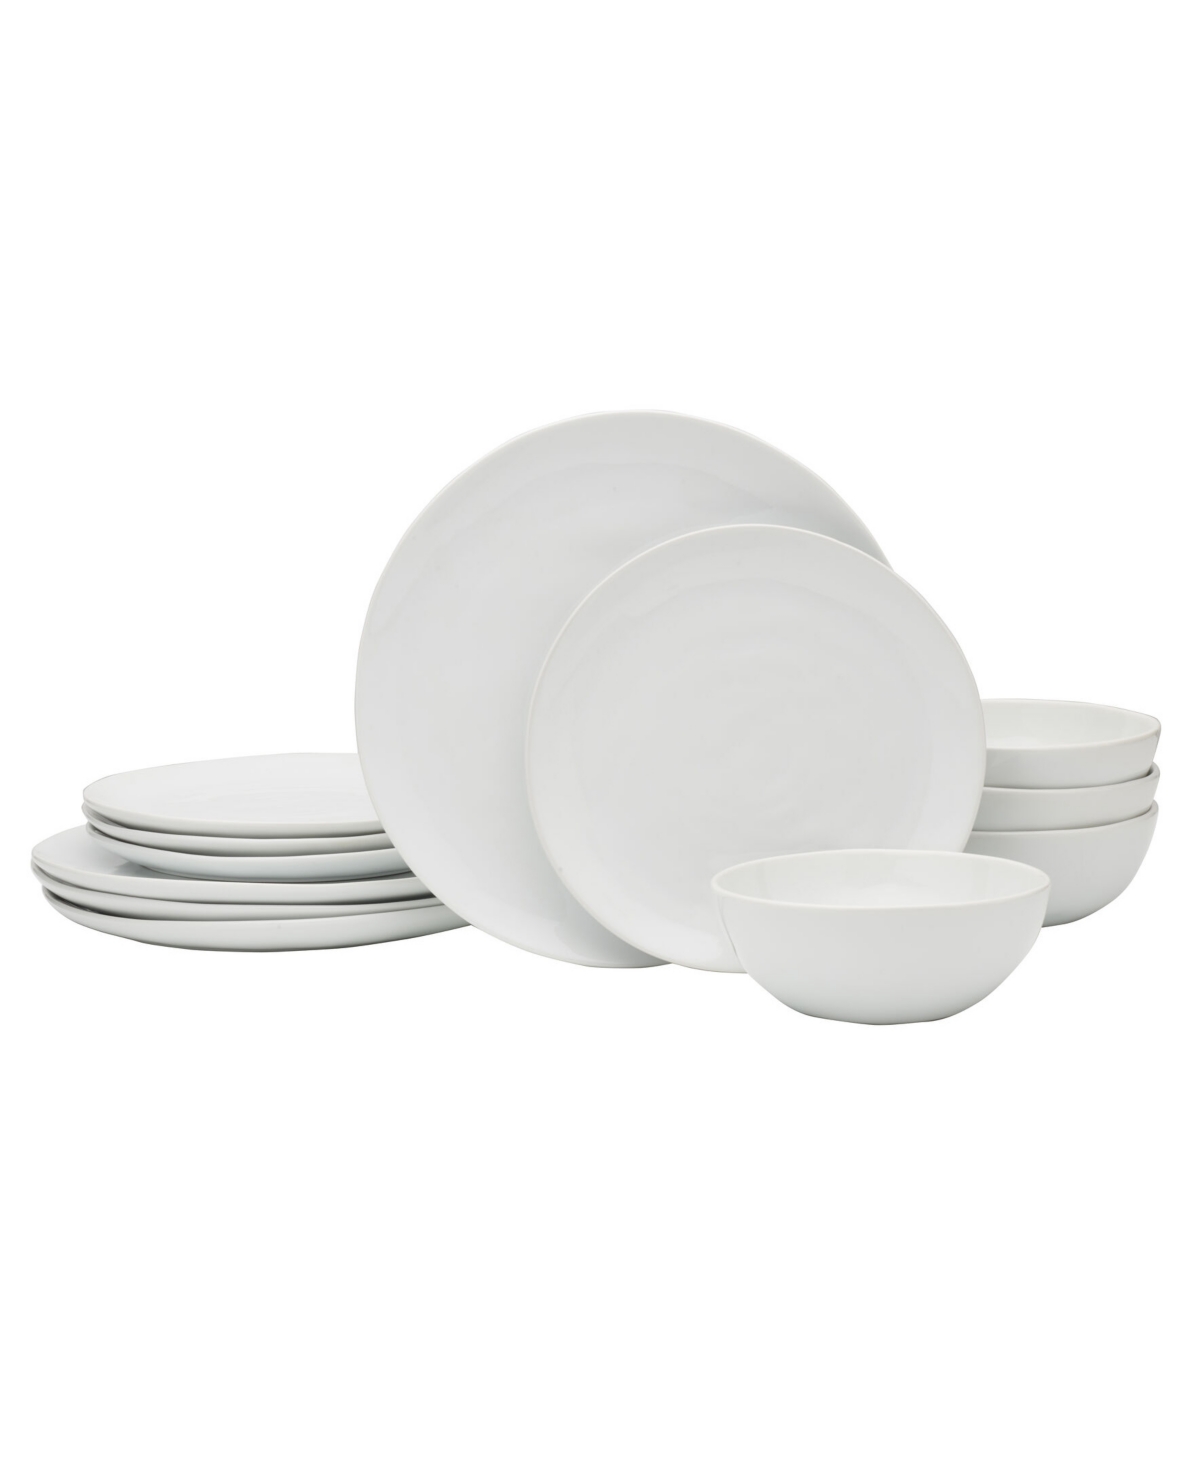 Everyday Whiteware 12 Piece Dinnerware Set, Service for 4 - White